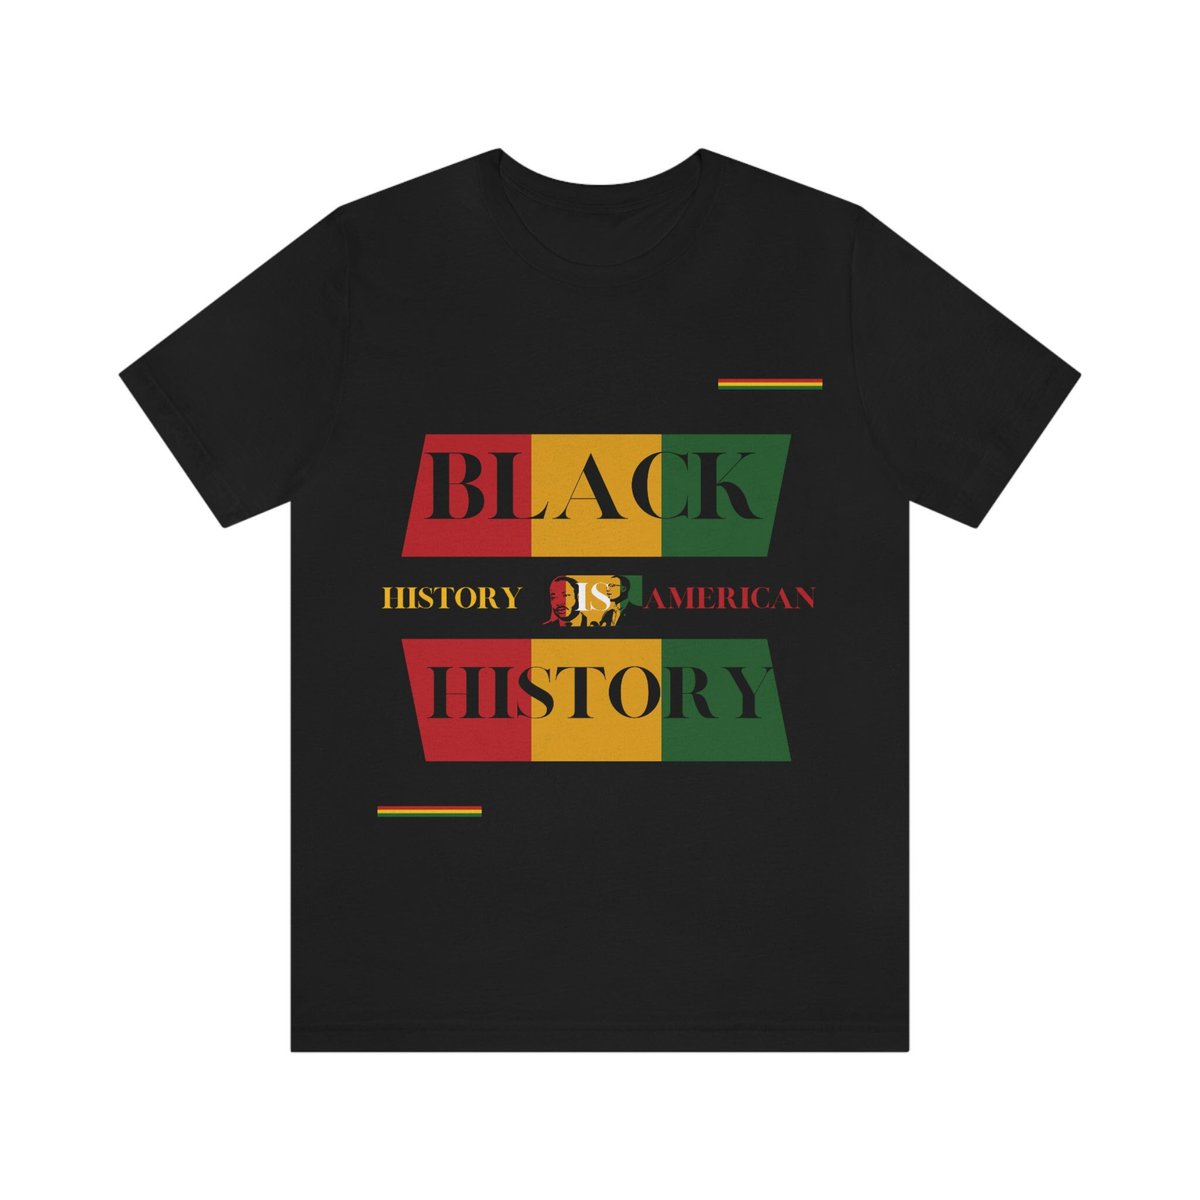 Happy Black History Month! 

New Shirt Alert! 

#BlackLivesMatter #BlackHistory #AfricanAmerican #BlackHistorySvg #BlackHistoryShirt #BlackGirlMagic #AfricanAmericanSvg #BlackHistoryPng #BlackWomanSvg #BlmShirt